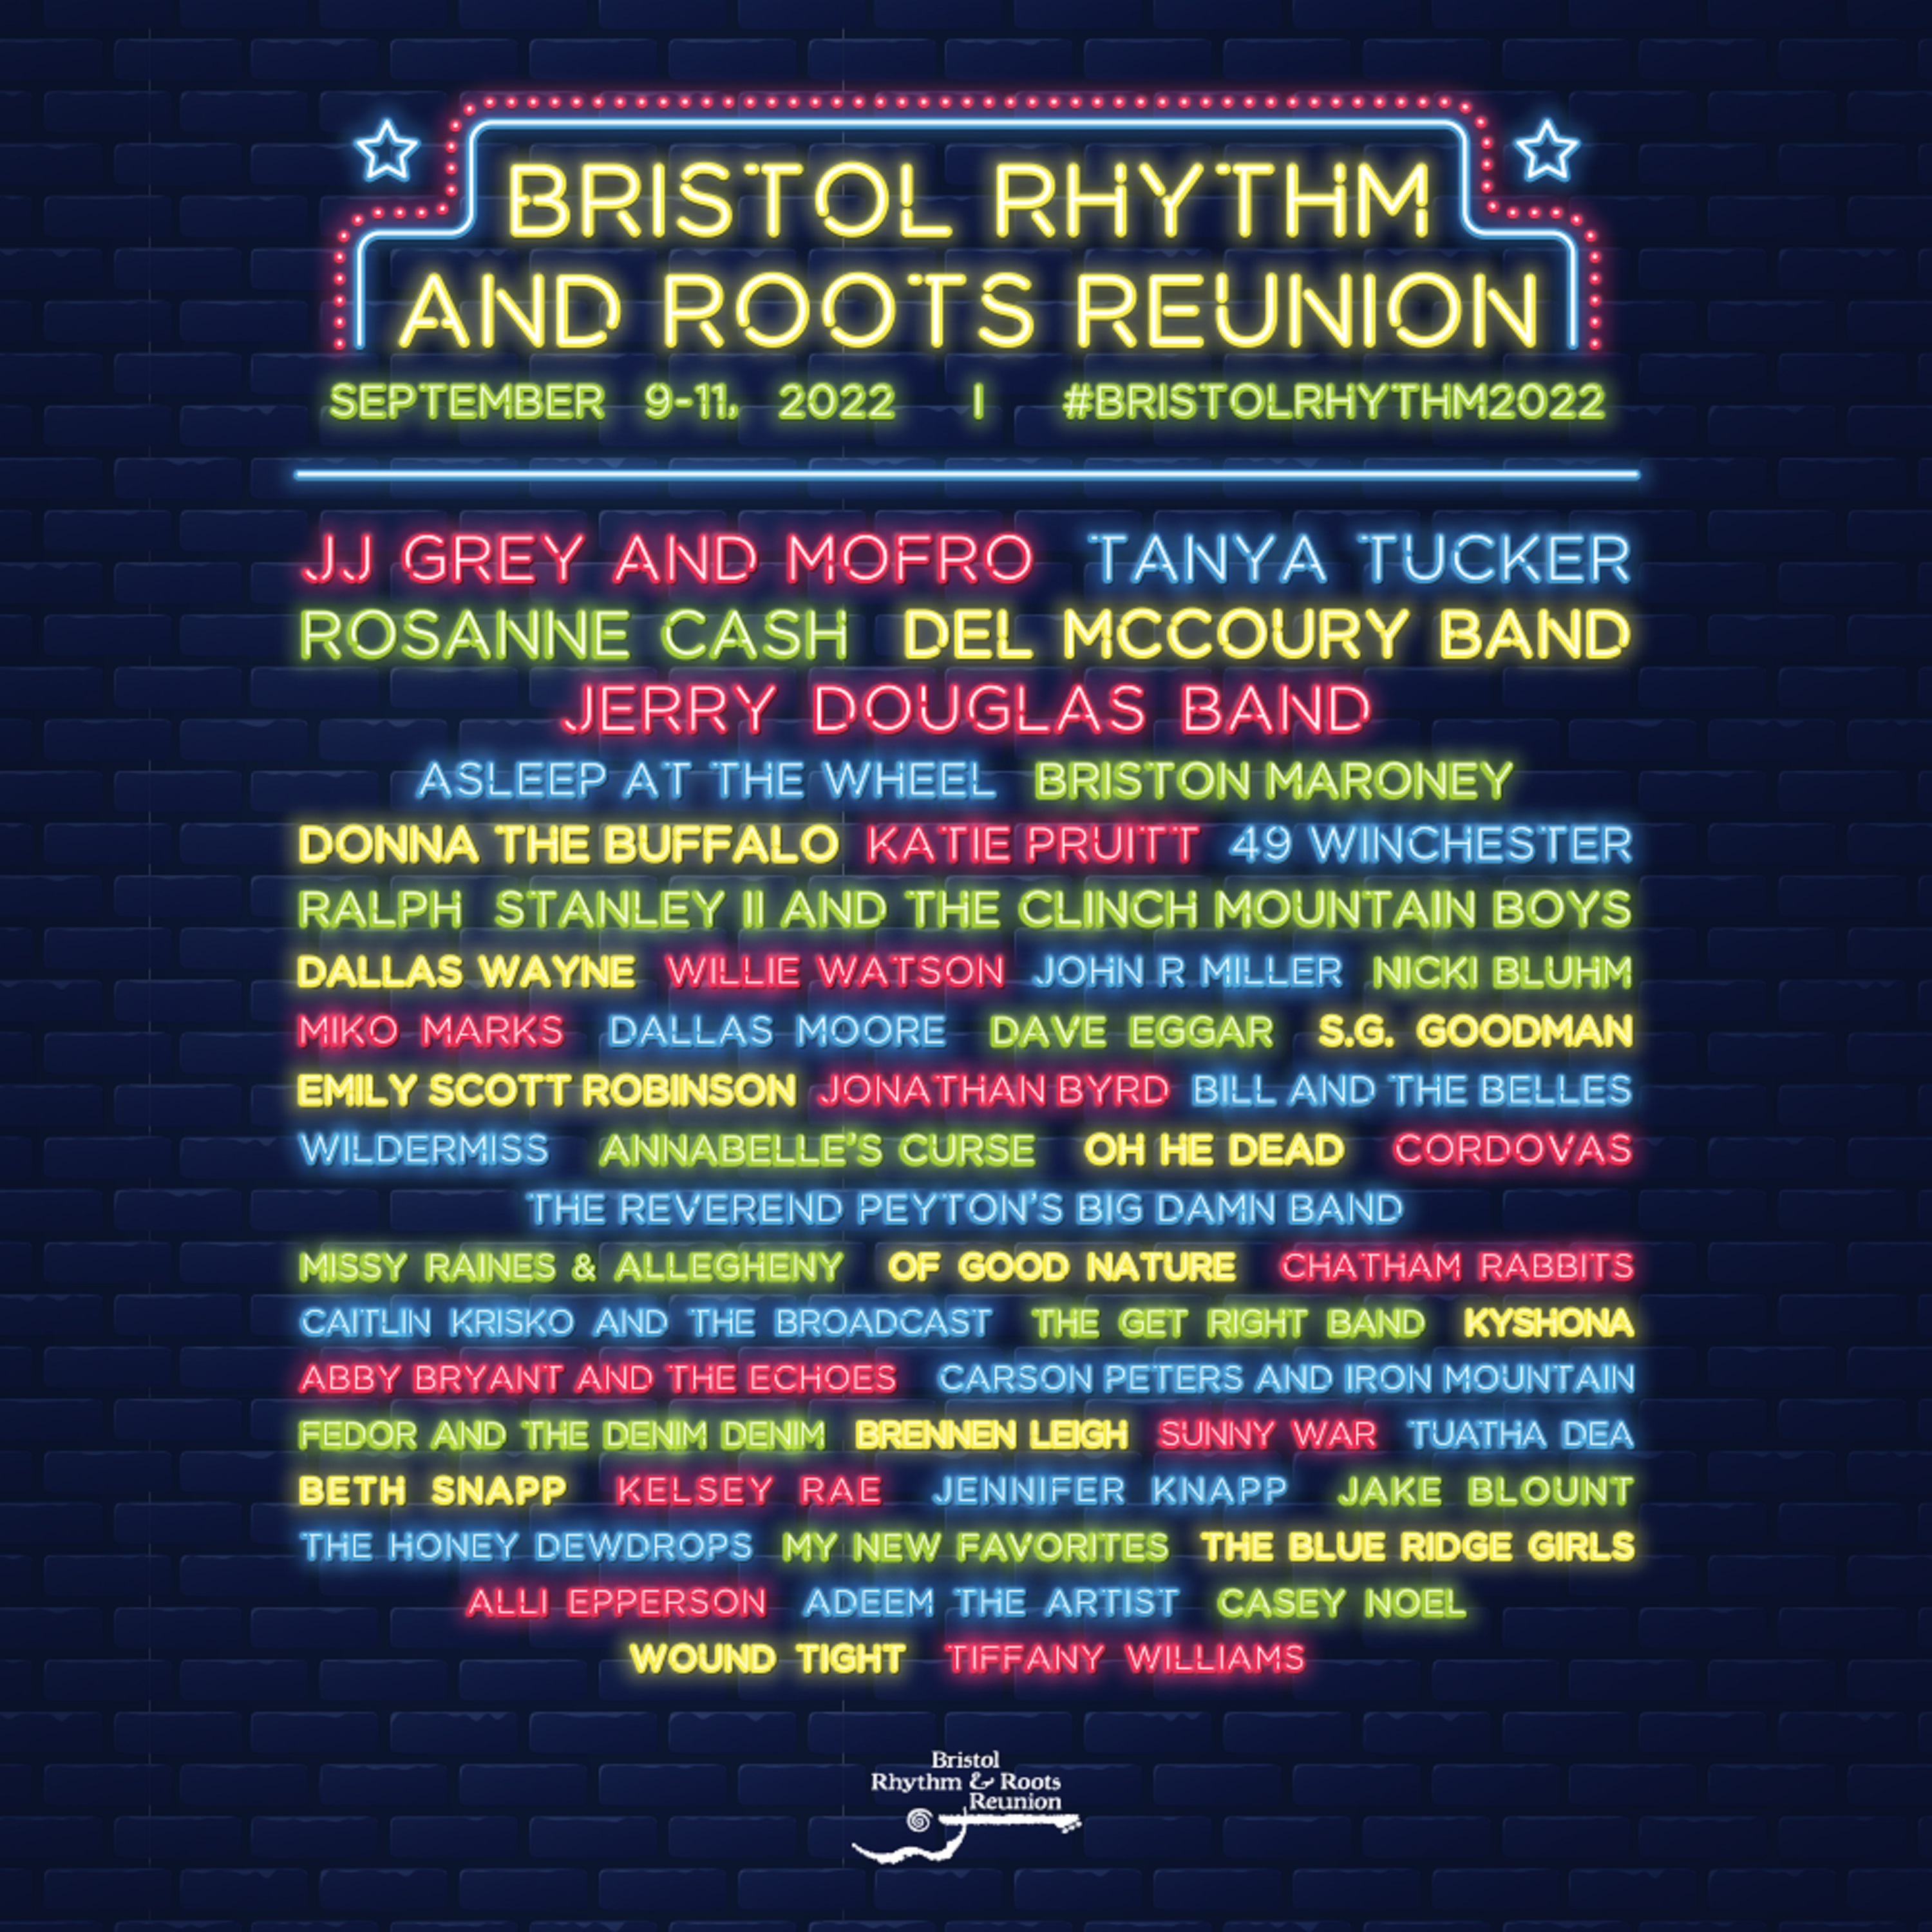 Tanya Tucker, Del McCoury Band, Asleep at the Wheel Coming to Bristol Rhythm & Roots Reunion 2022